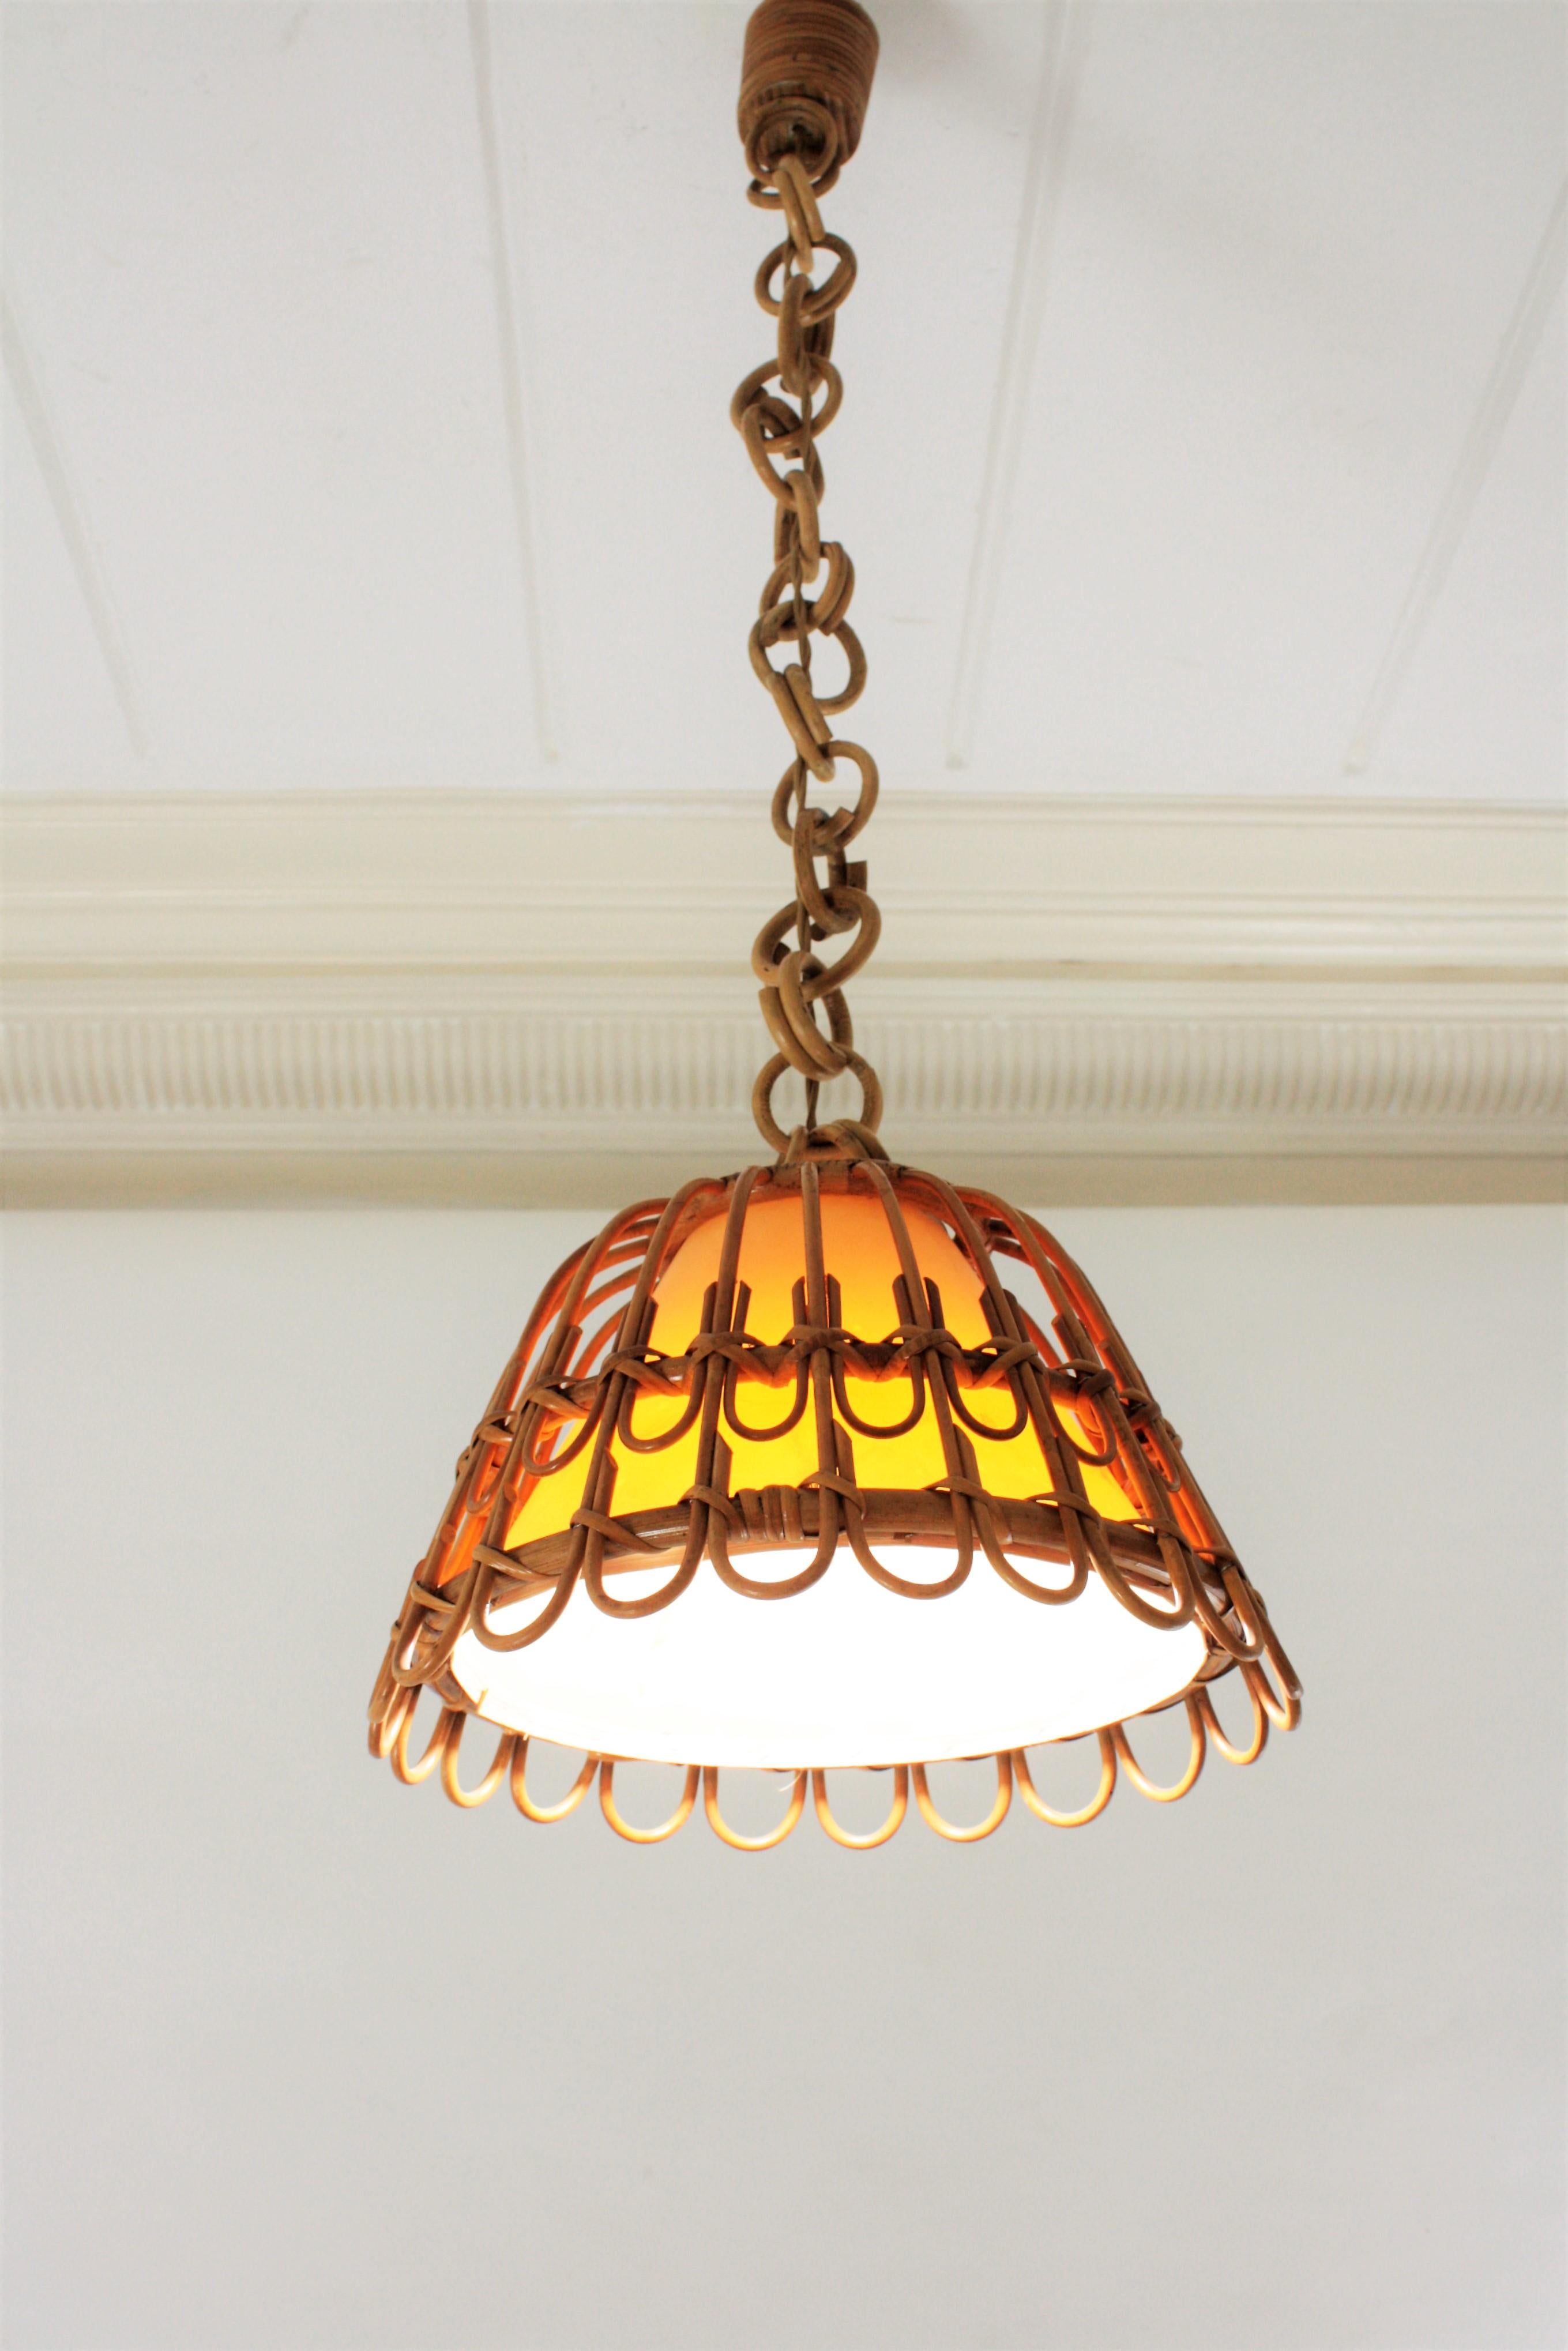 20th Century Spanish Wicker and Rattan Pendant Hanging Lamp, Mid-Century Modern Period